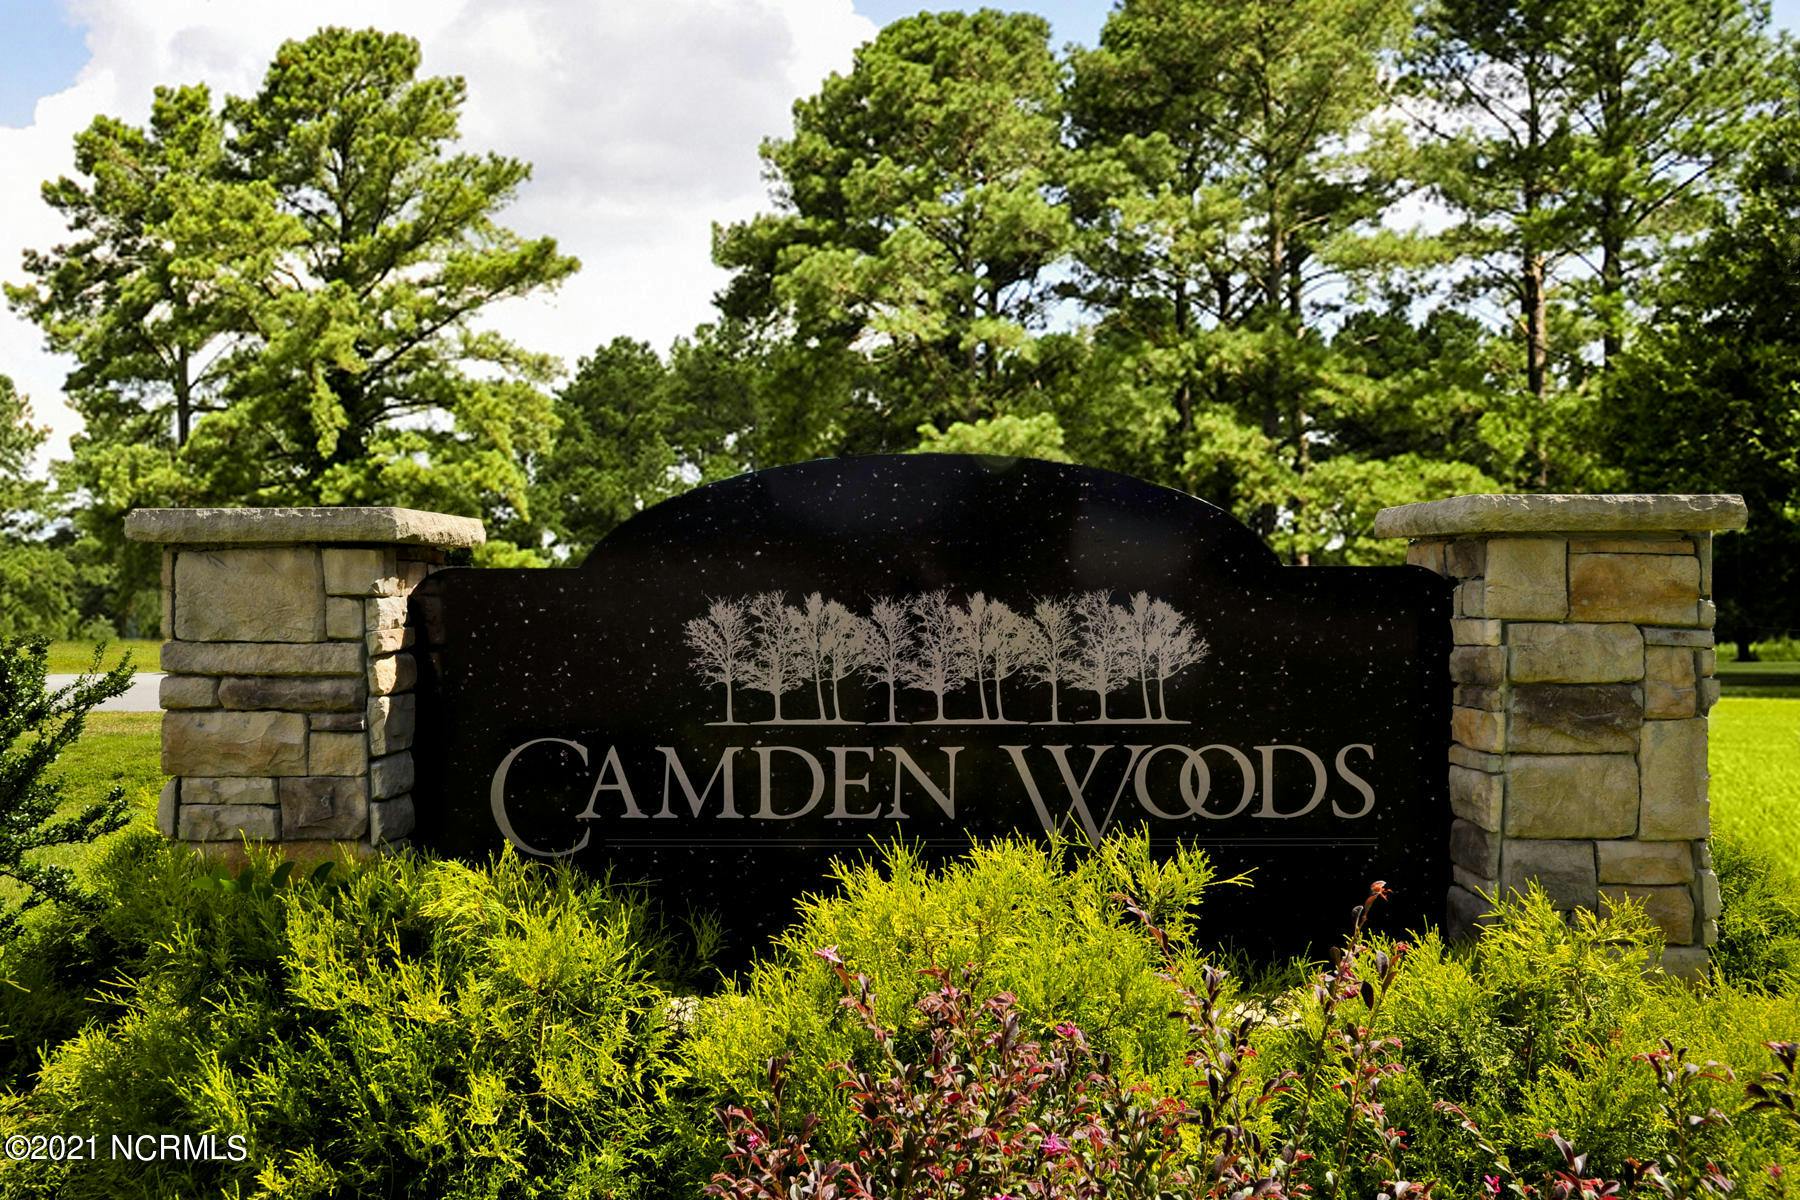 000 Camden Woods Custom Signage